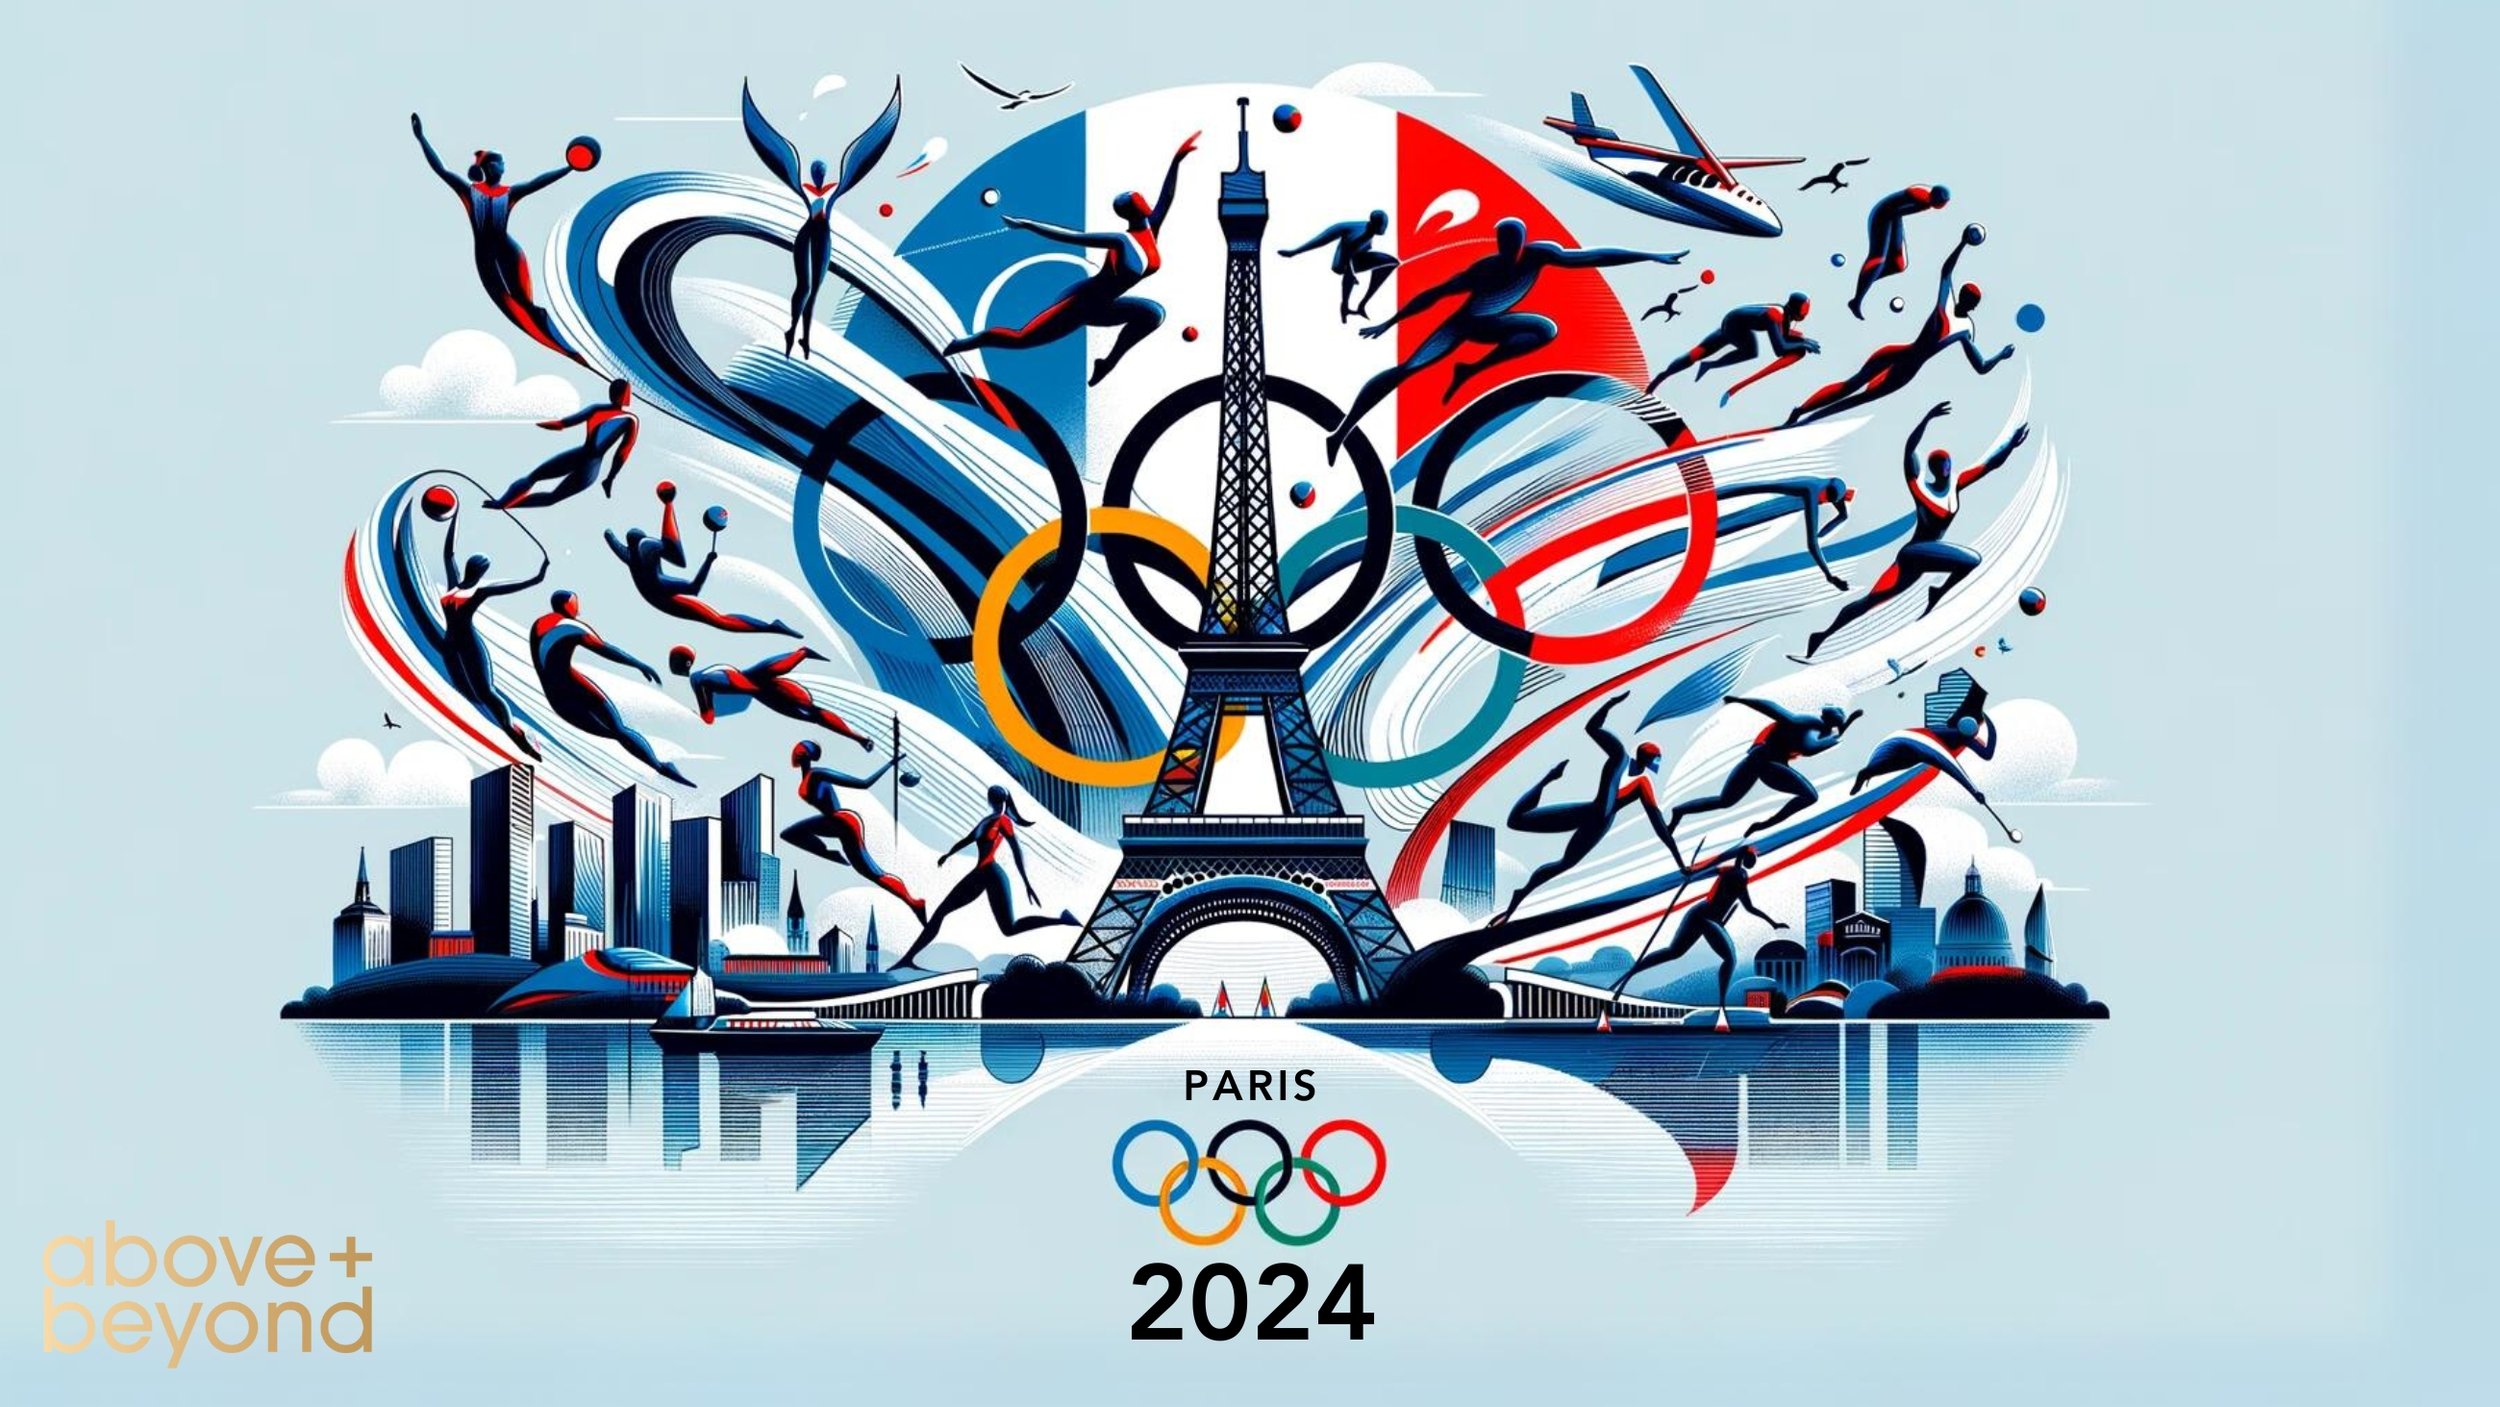 The Olympics Paris